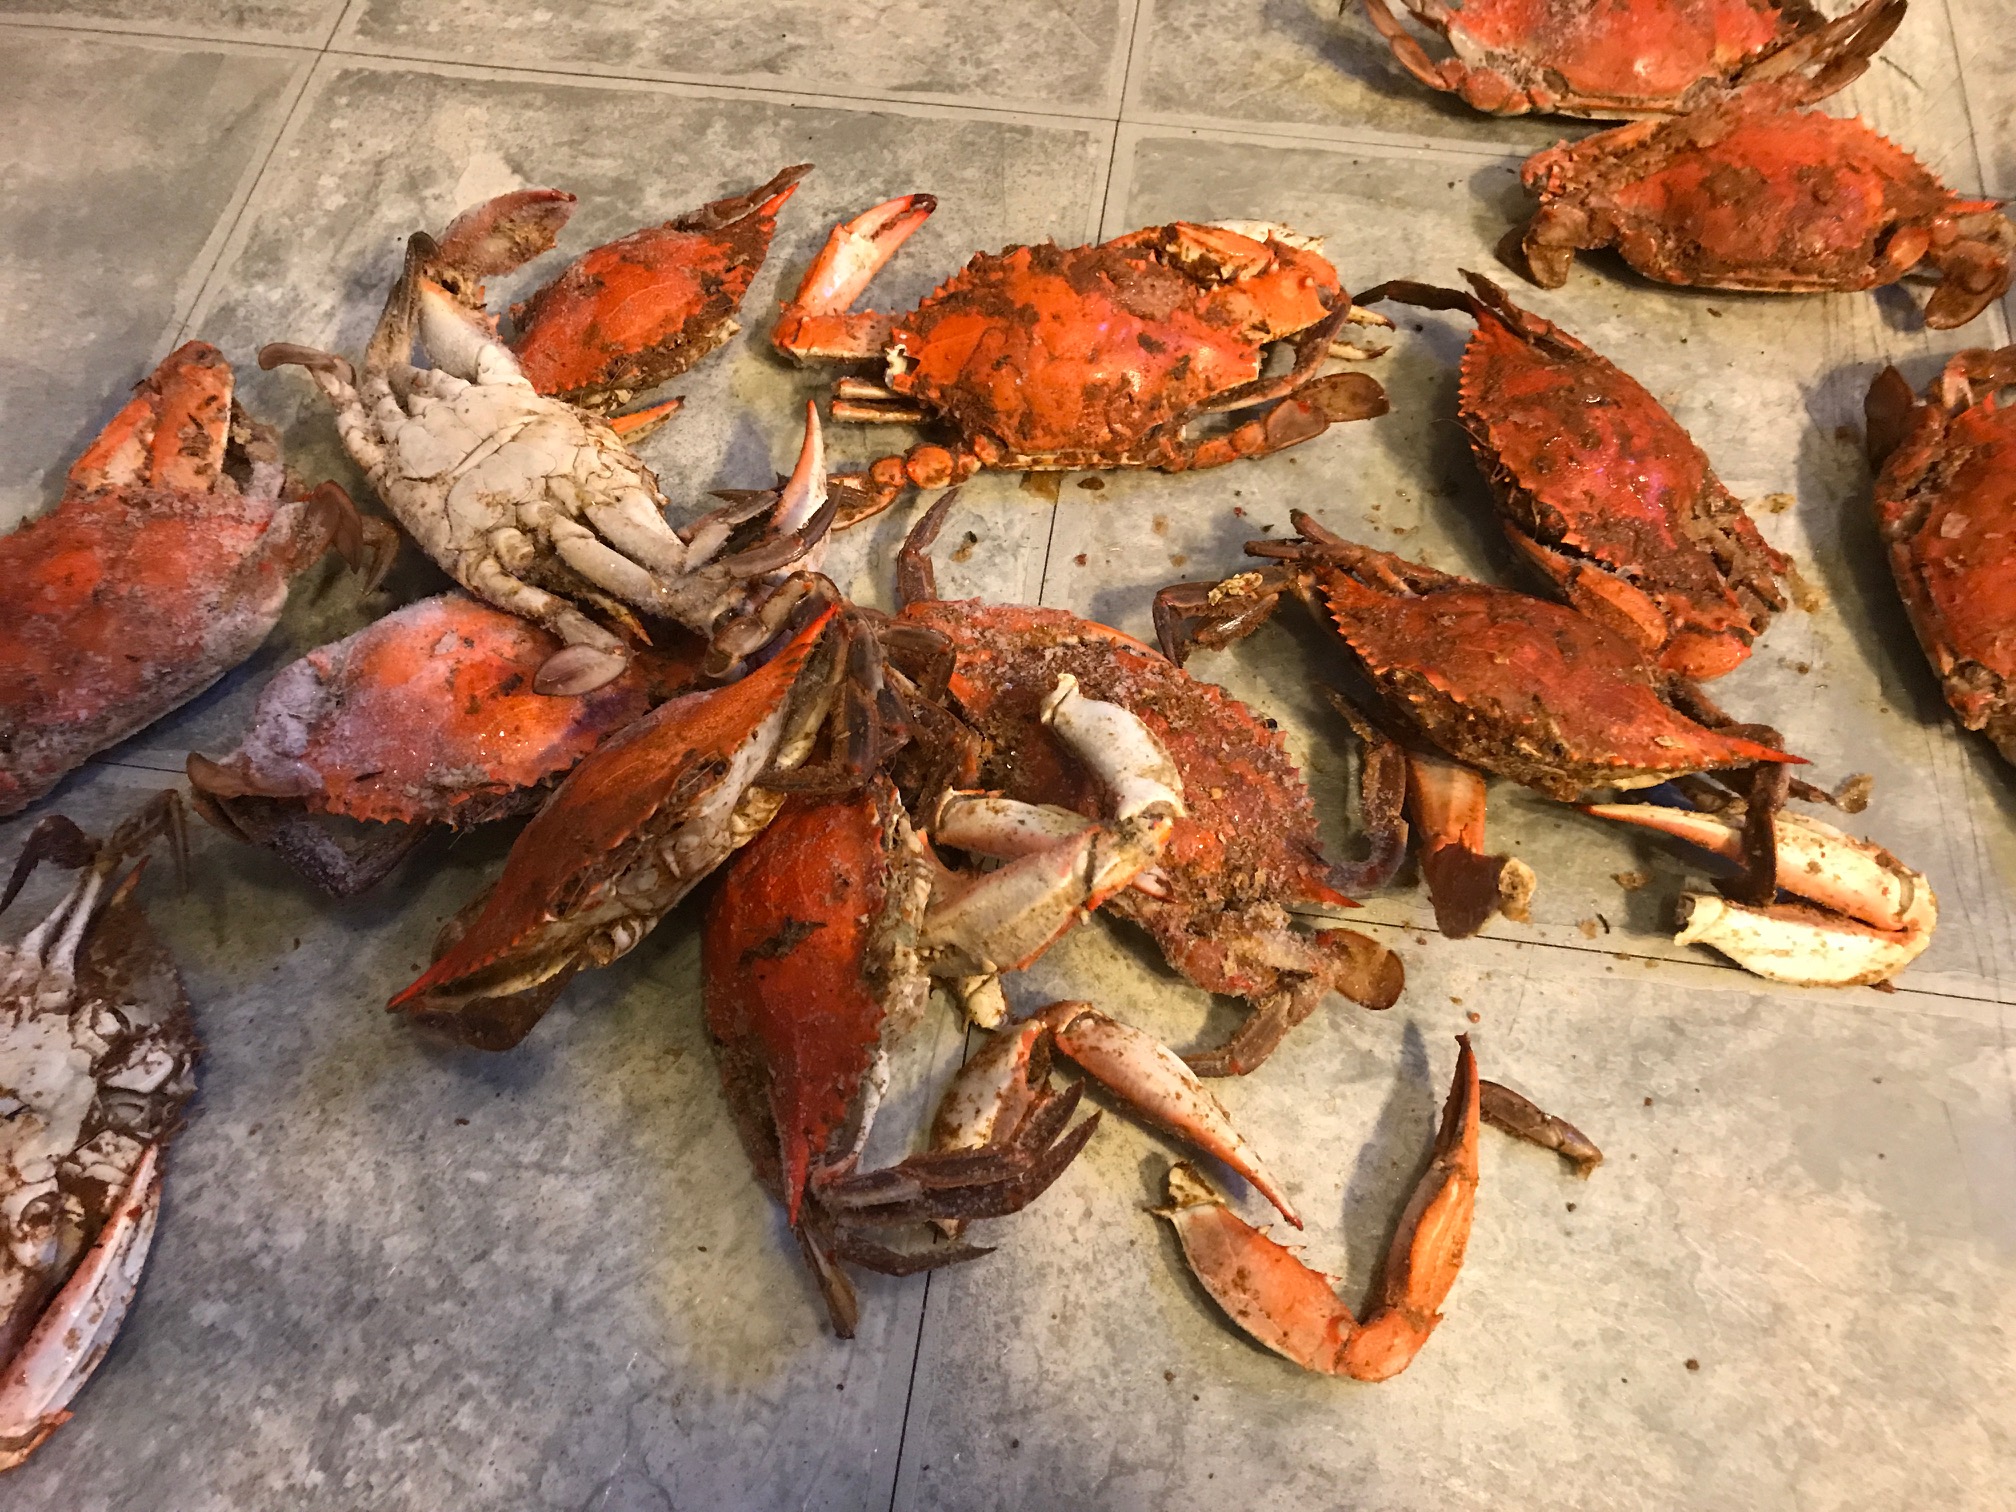 Maryland crabs